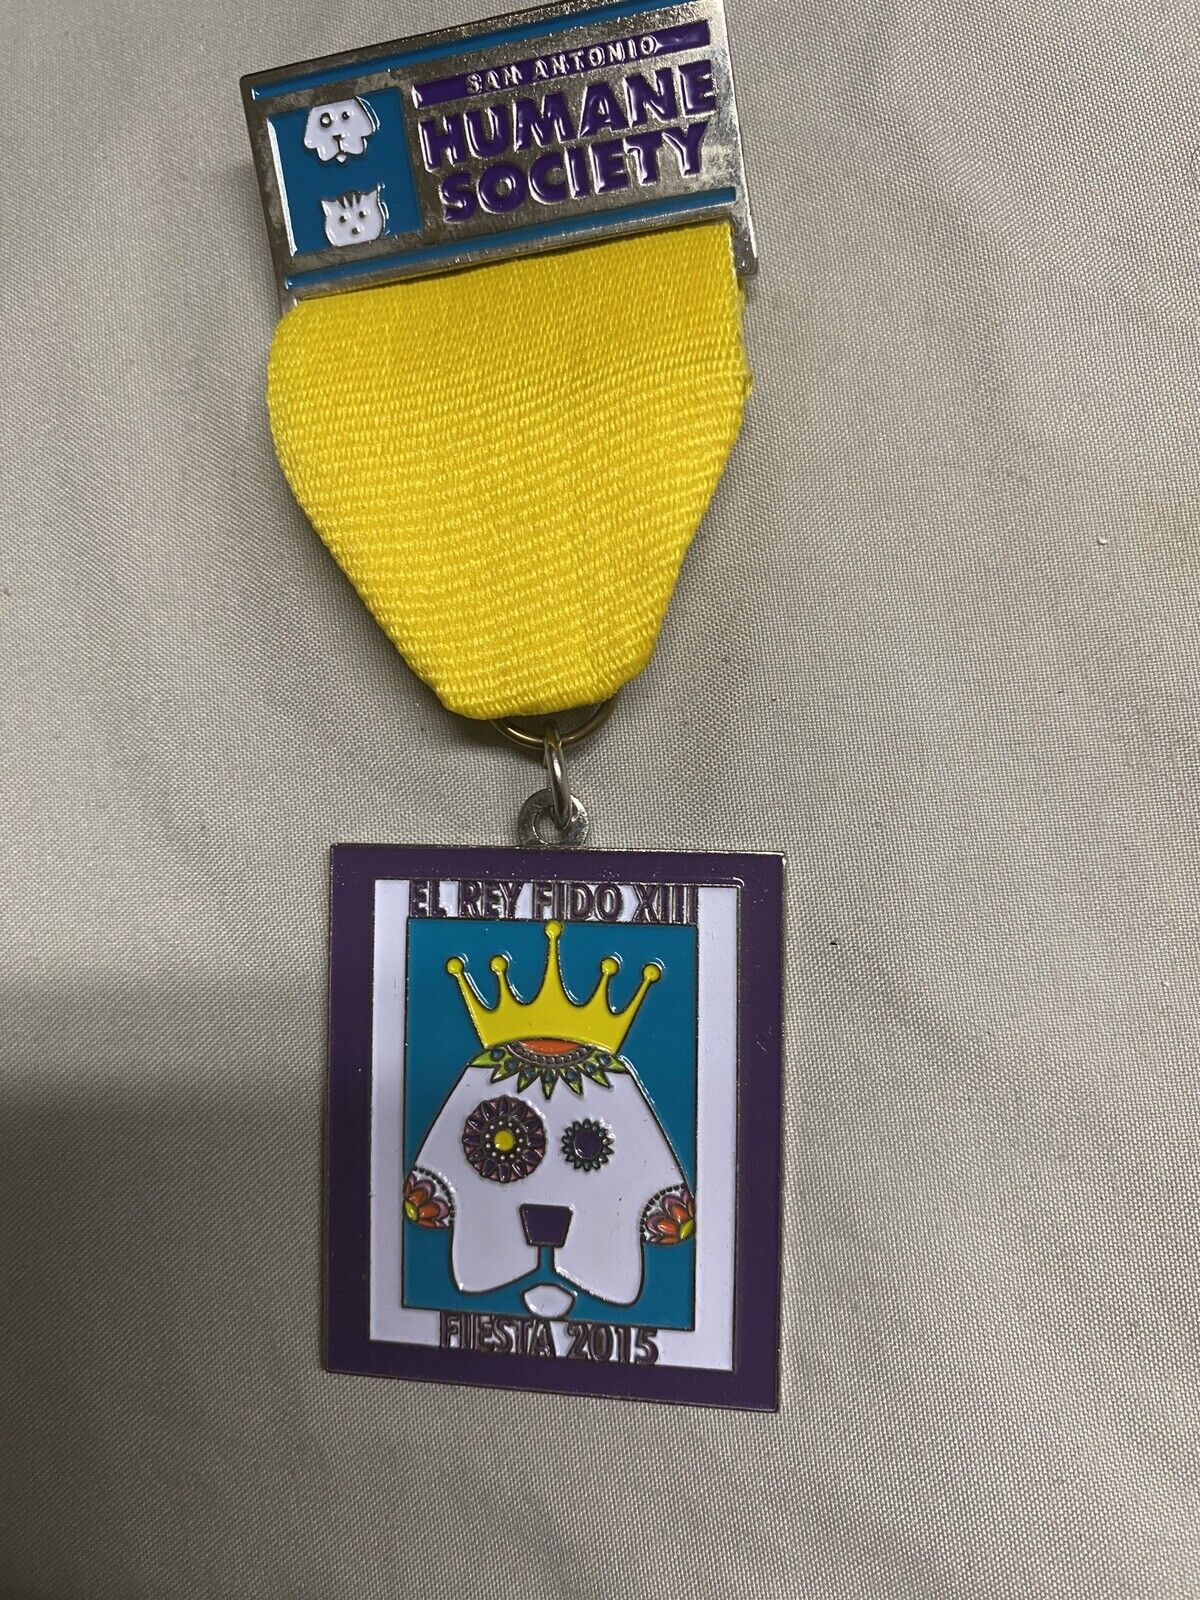 2015 El Rey Fido XIII Fiesta Medal